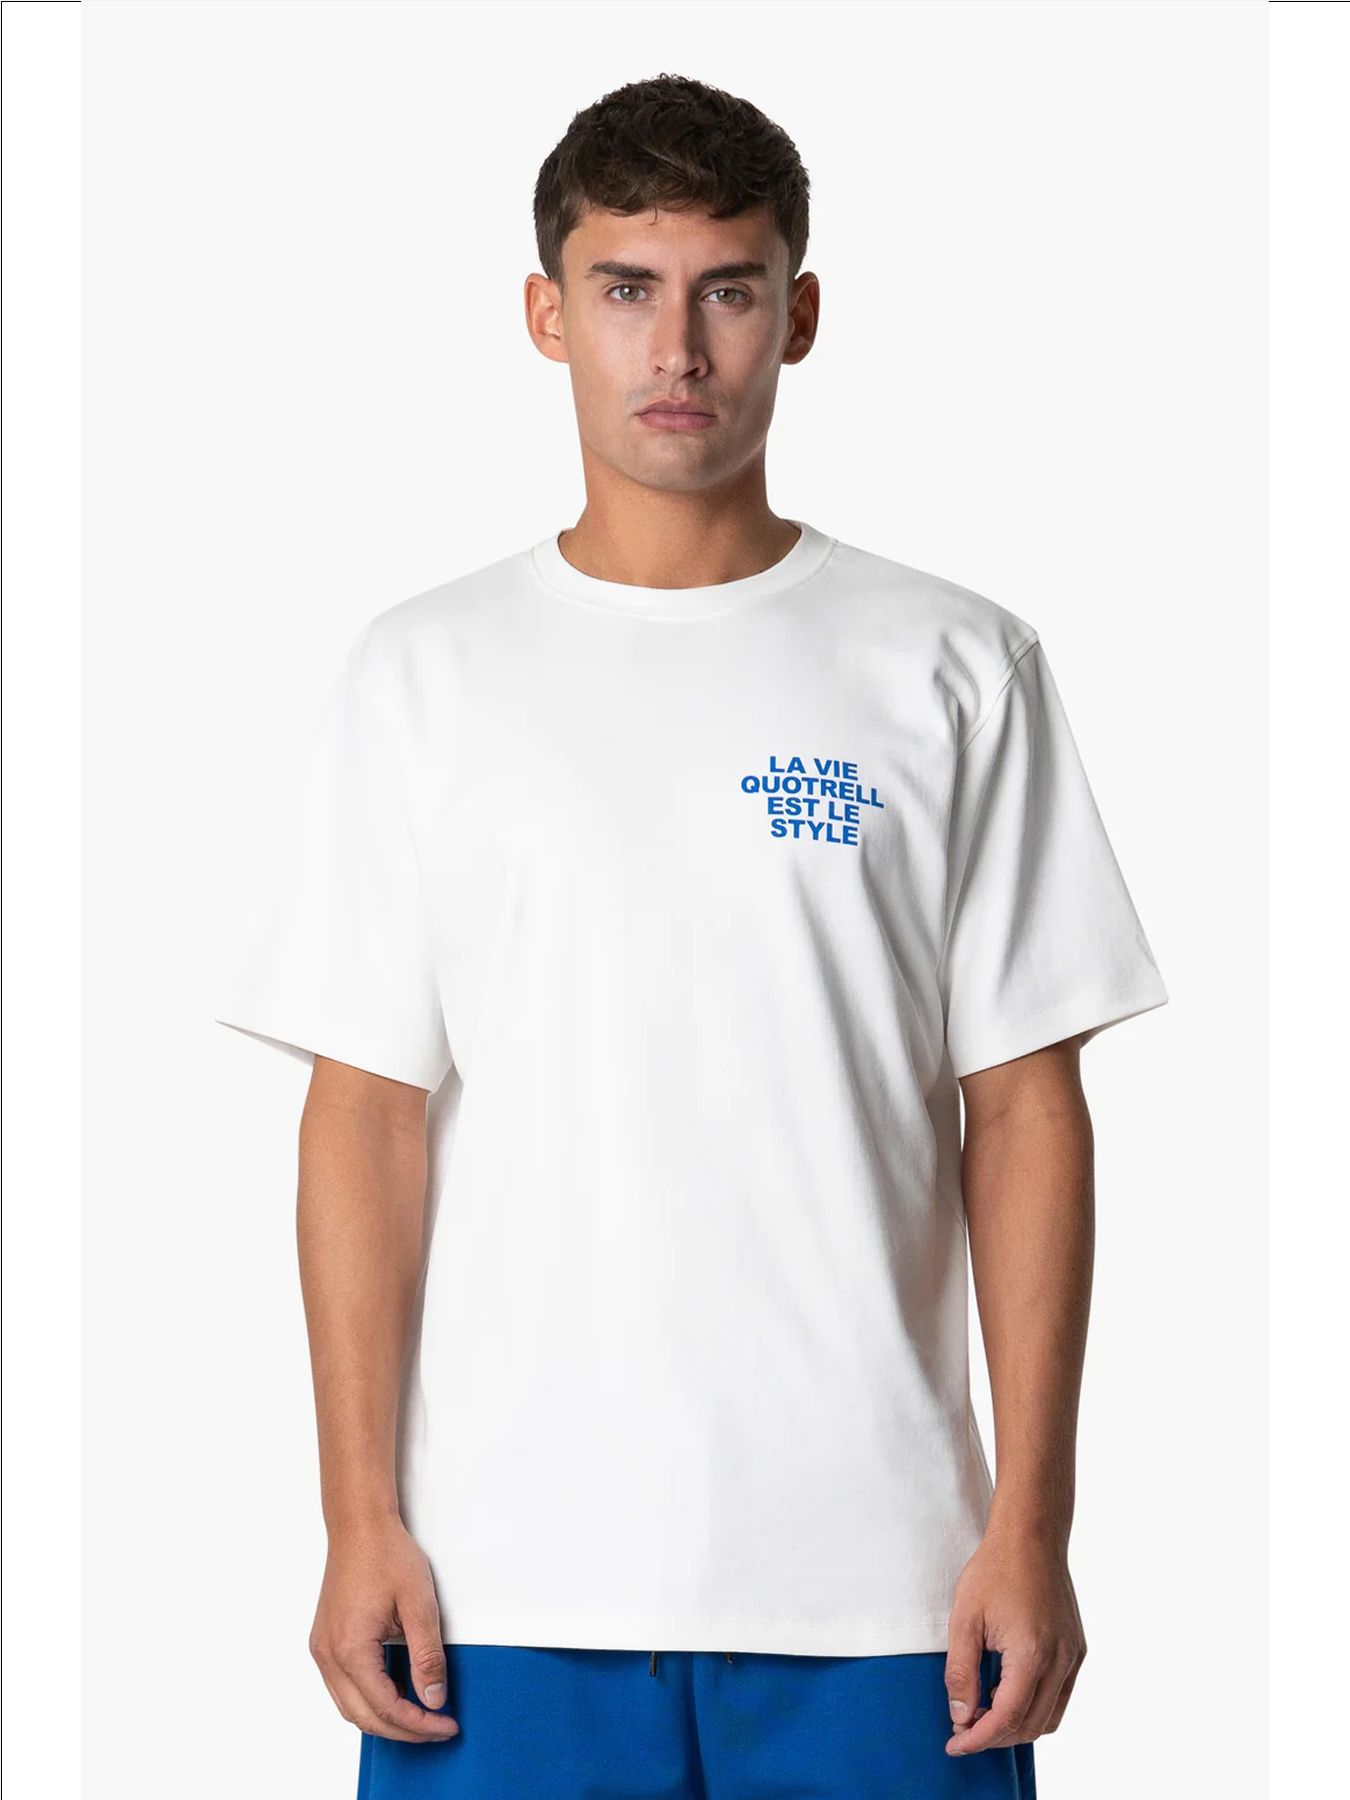 Quotrell La vie t-shirt White/cobalt 00107928-WCO